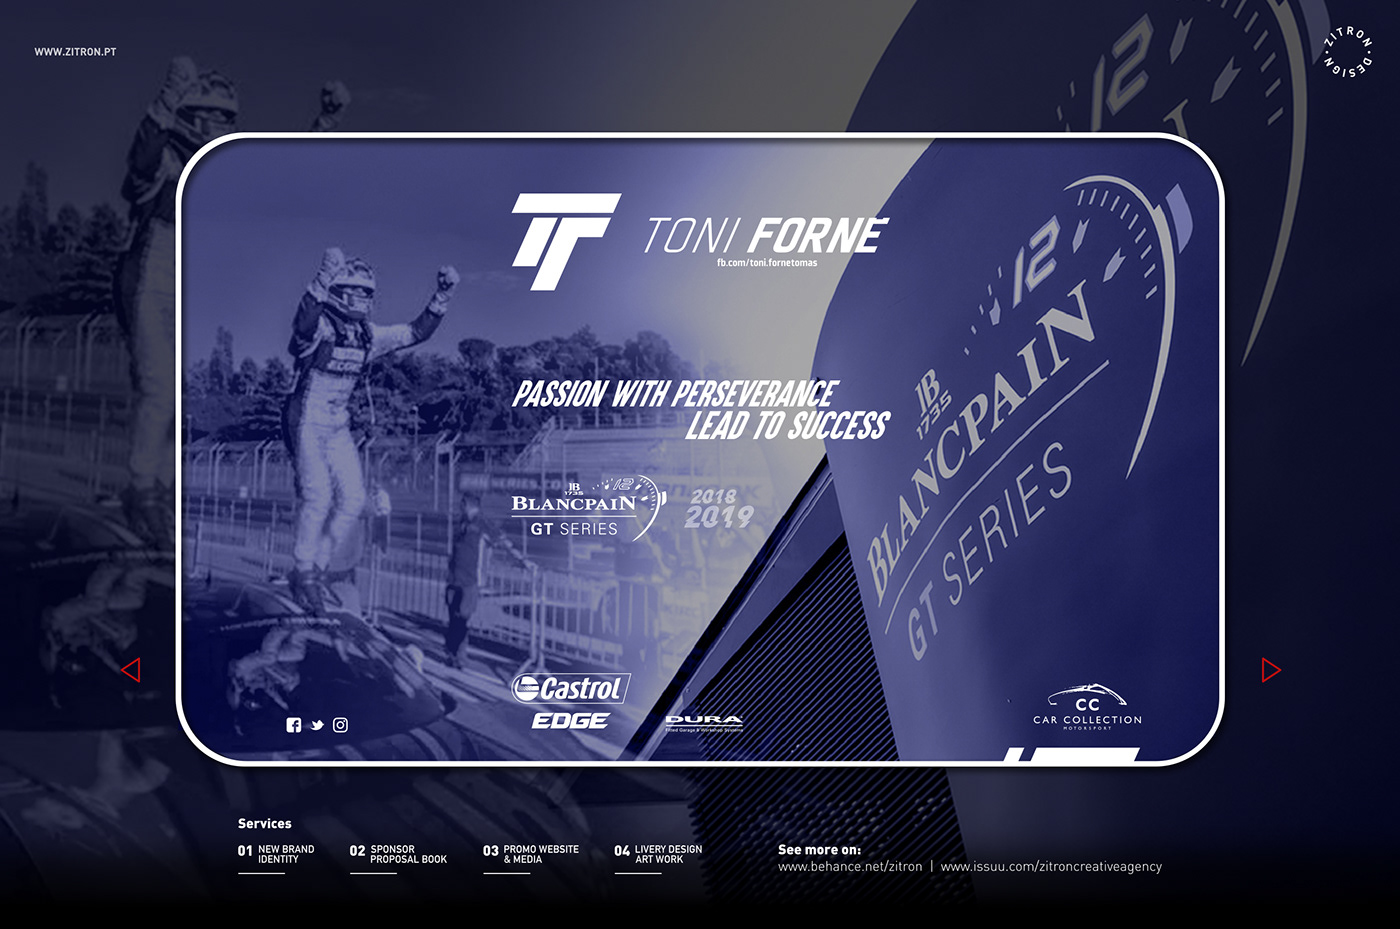 zitron design agency Toni forne racing driver sponsor proposal book blancpain gt series racing design Racing